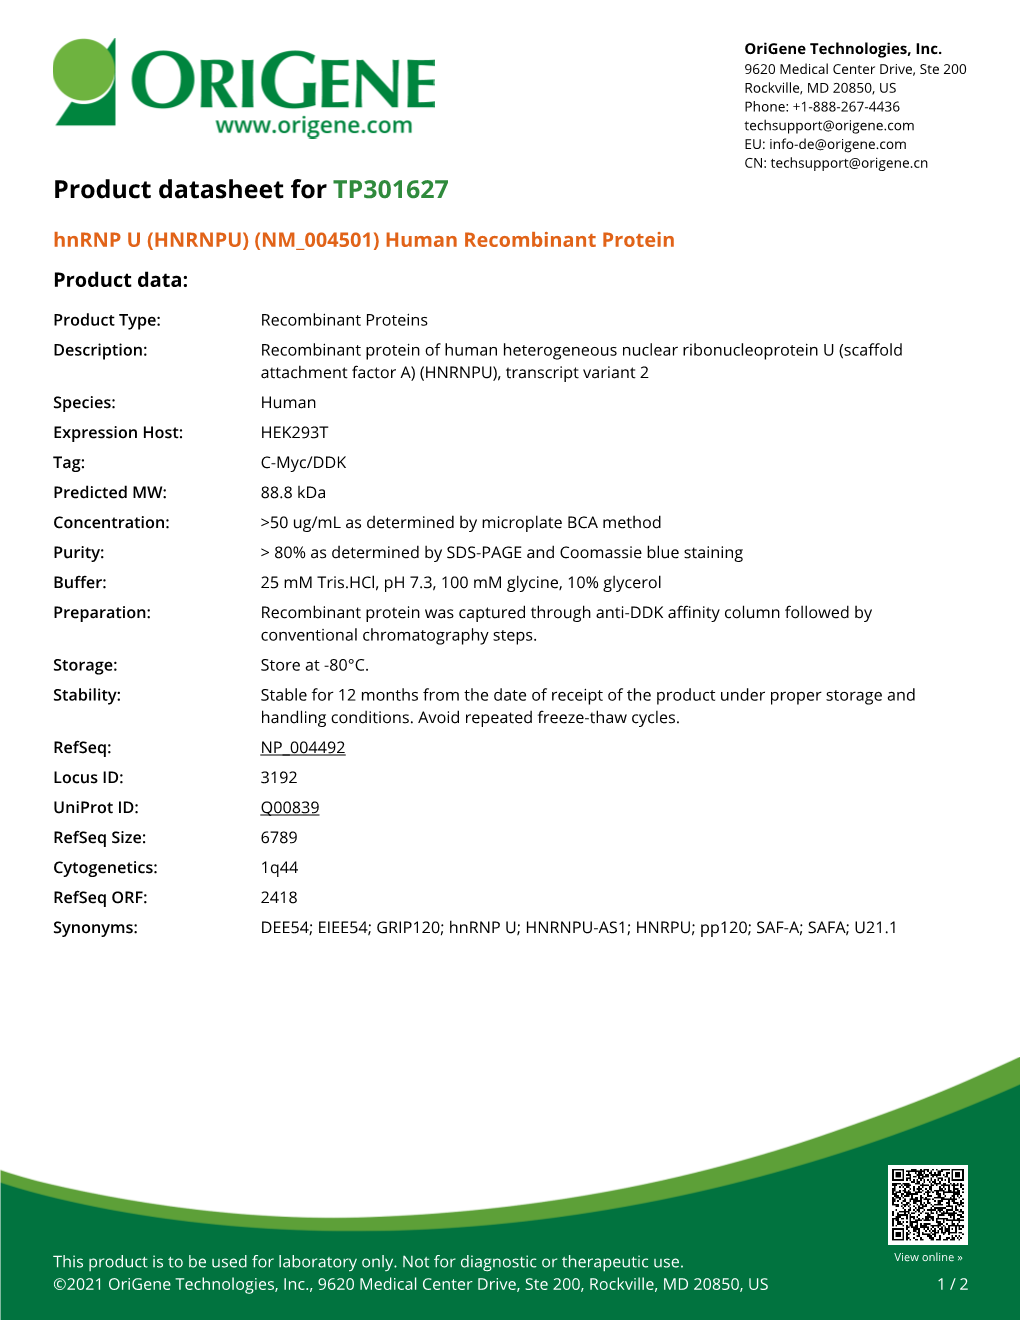 Hnrnp U (HNRNPU) (NM 004501) Human Recombinant Protein Product Data